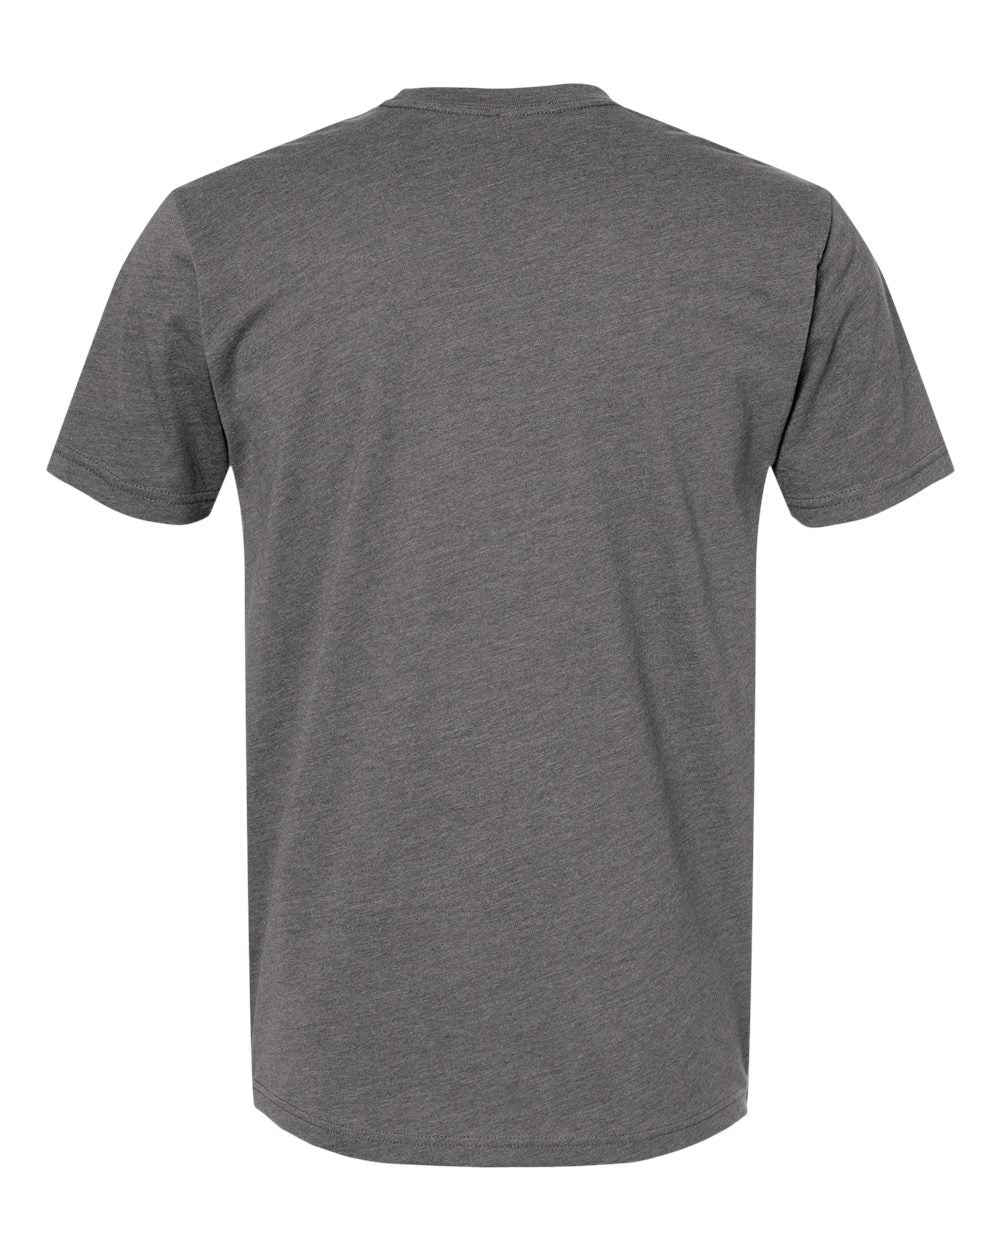 Back of dark grey shirt from Nudge Printing